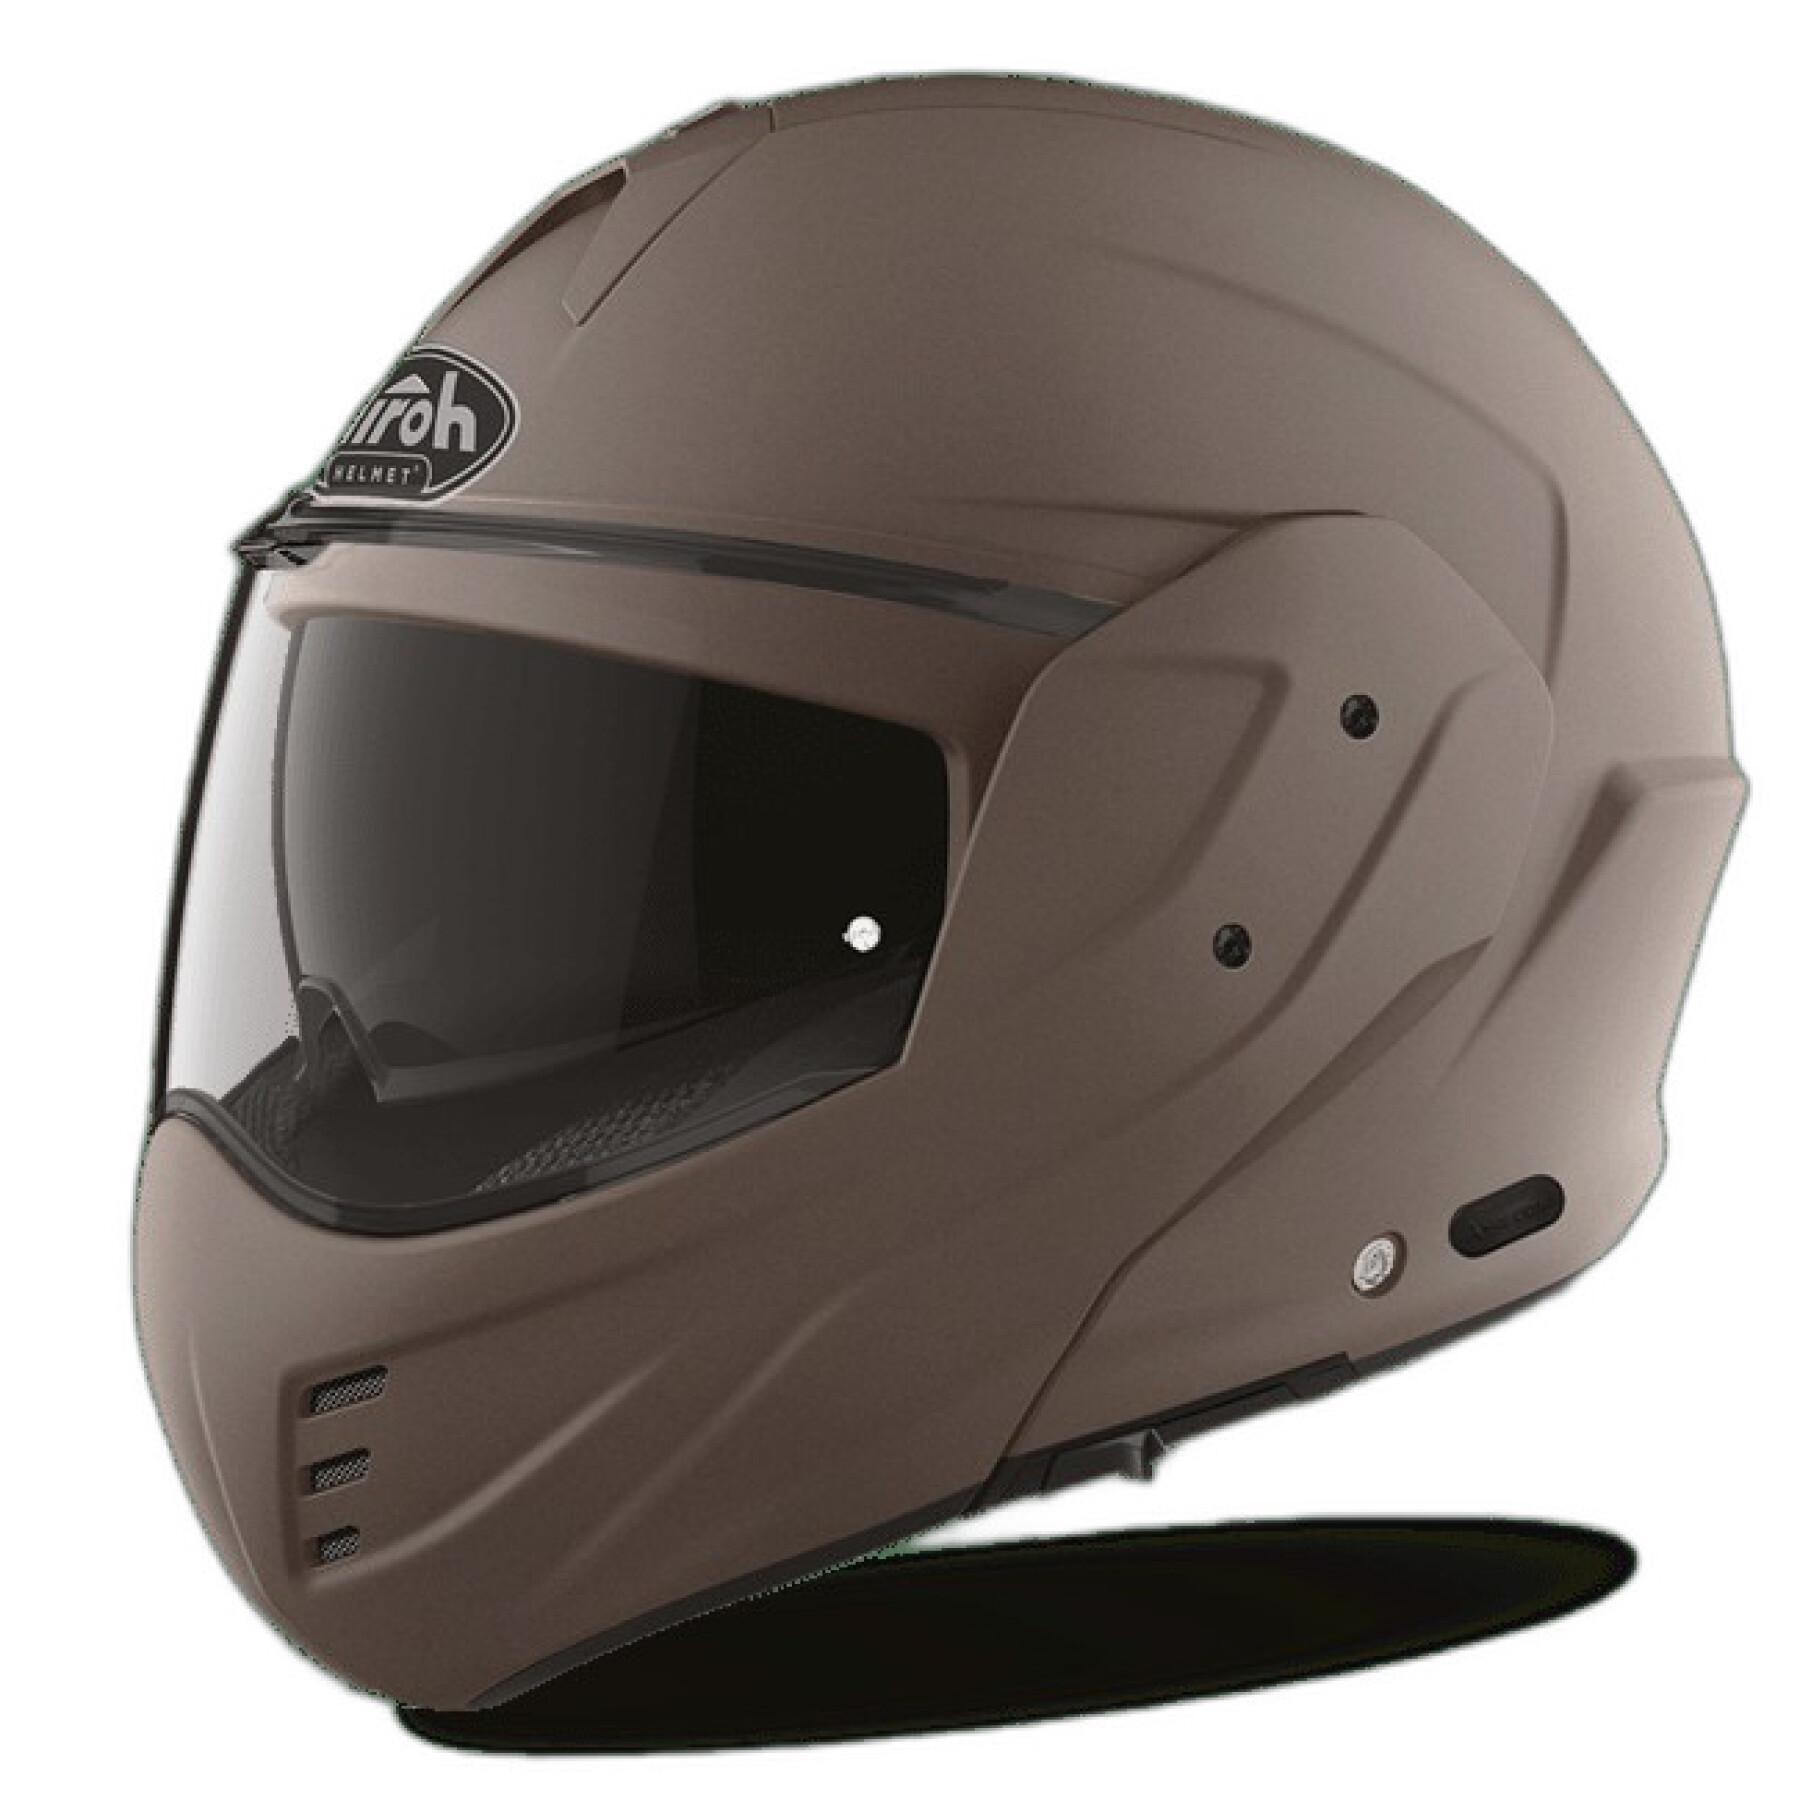 Modular motorcycle helmet Airoh Mathisse Color